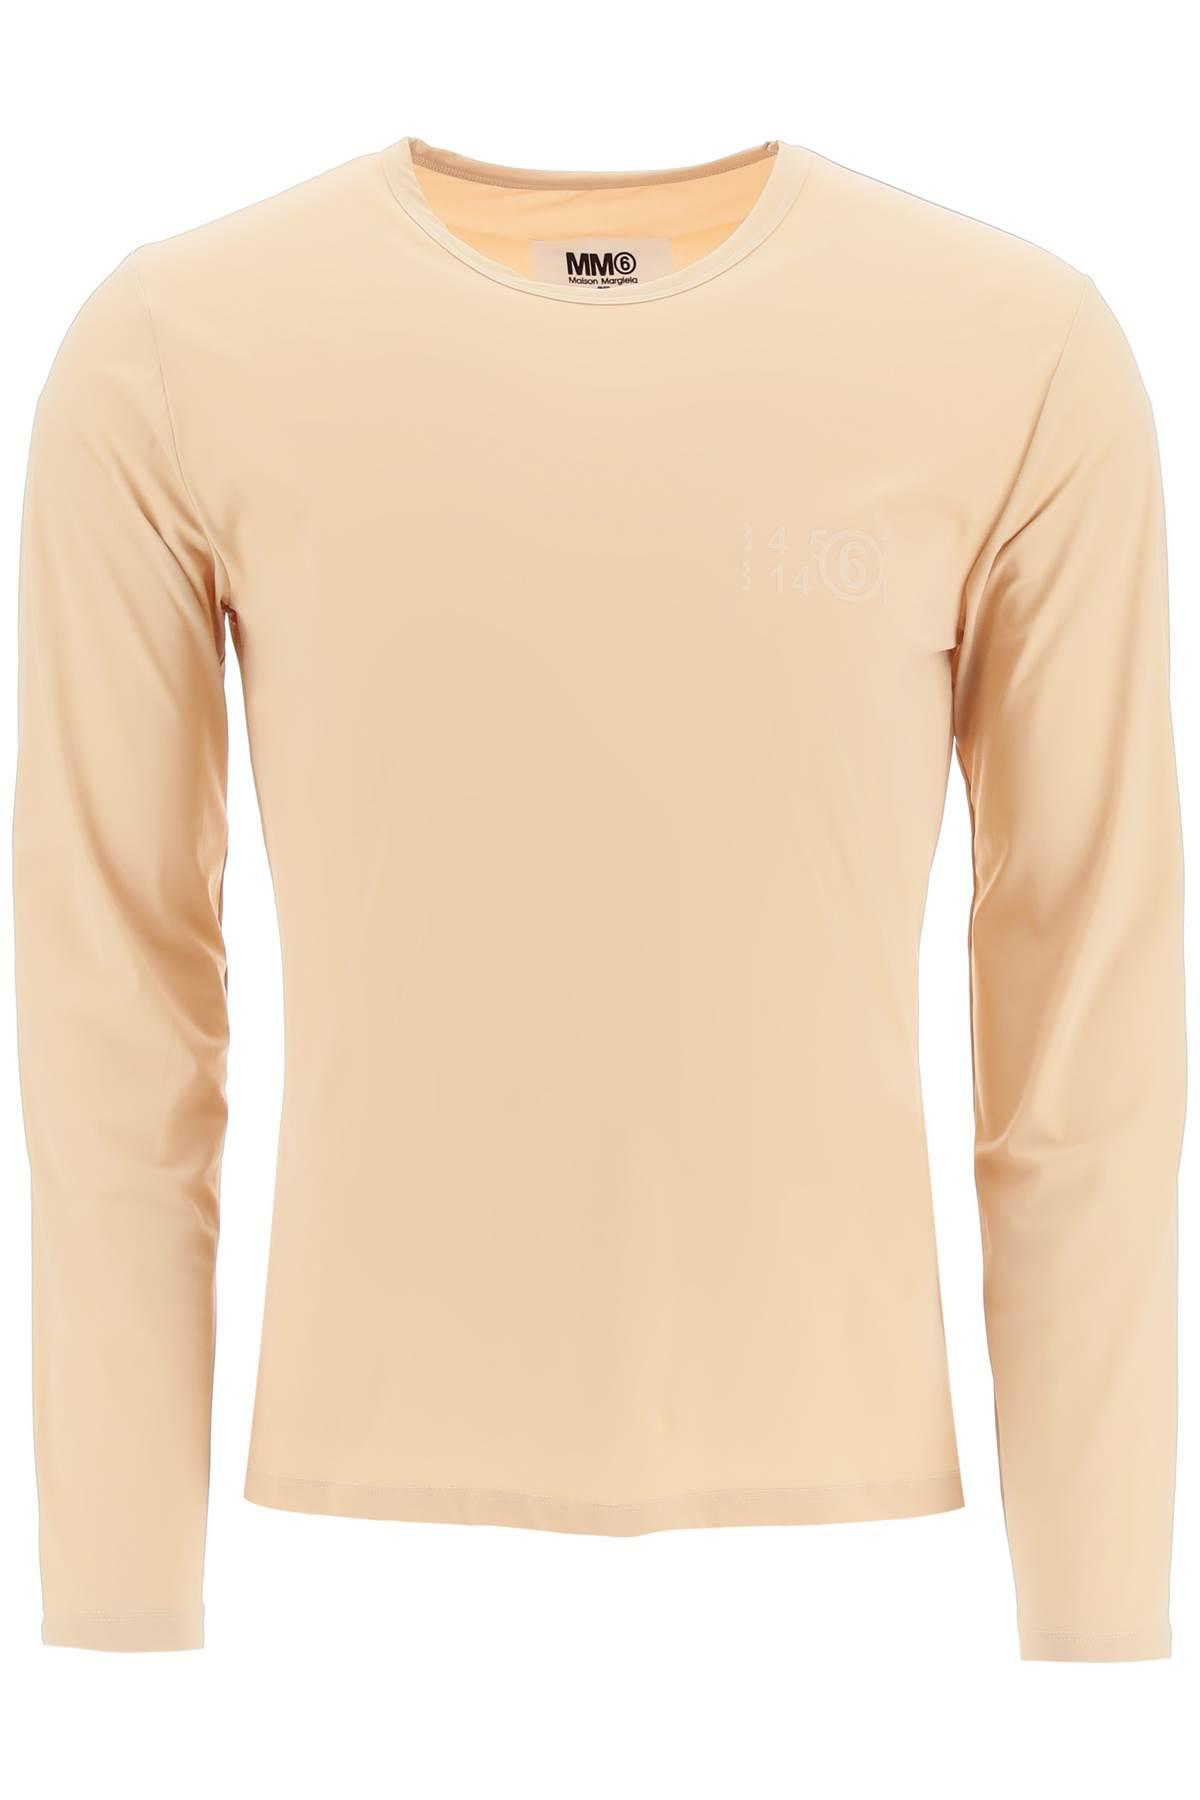 MM6 by Maison Martin Margiela Long Sleeve Lycra T-shirt in Natural for Men  | Lyst UK